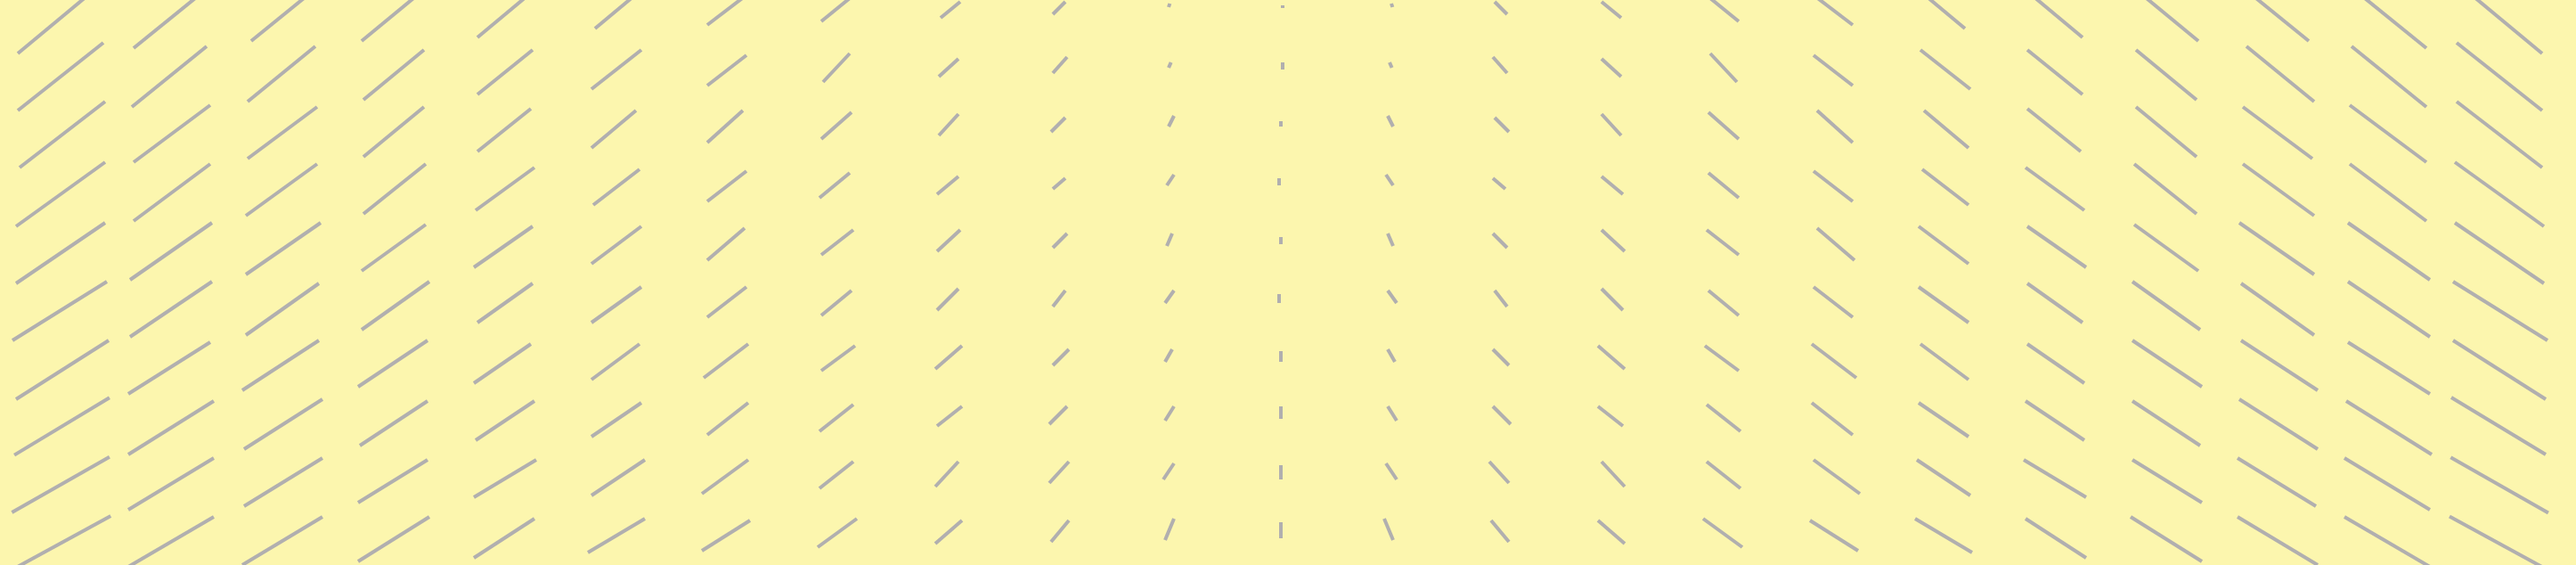 yellow nothingness pattern 